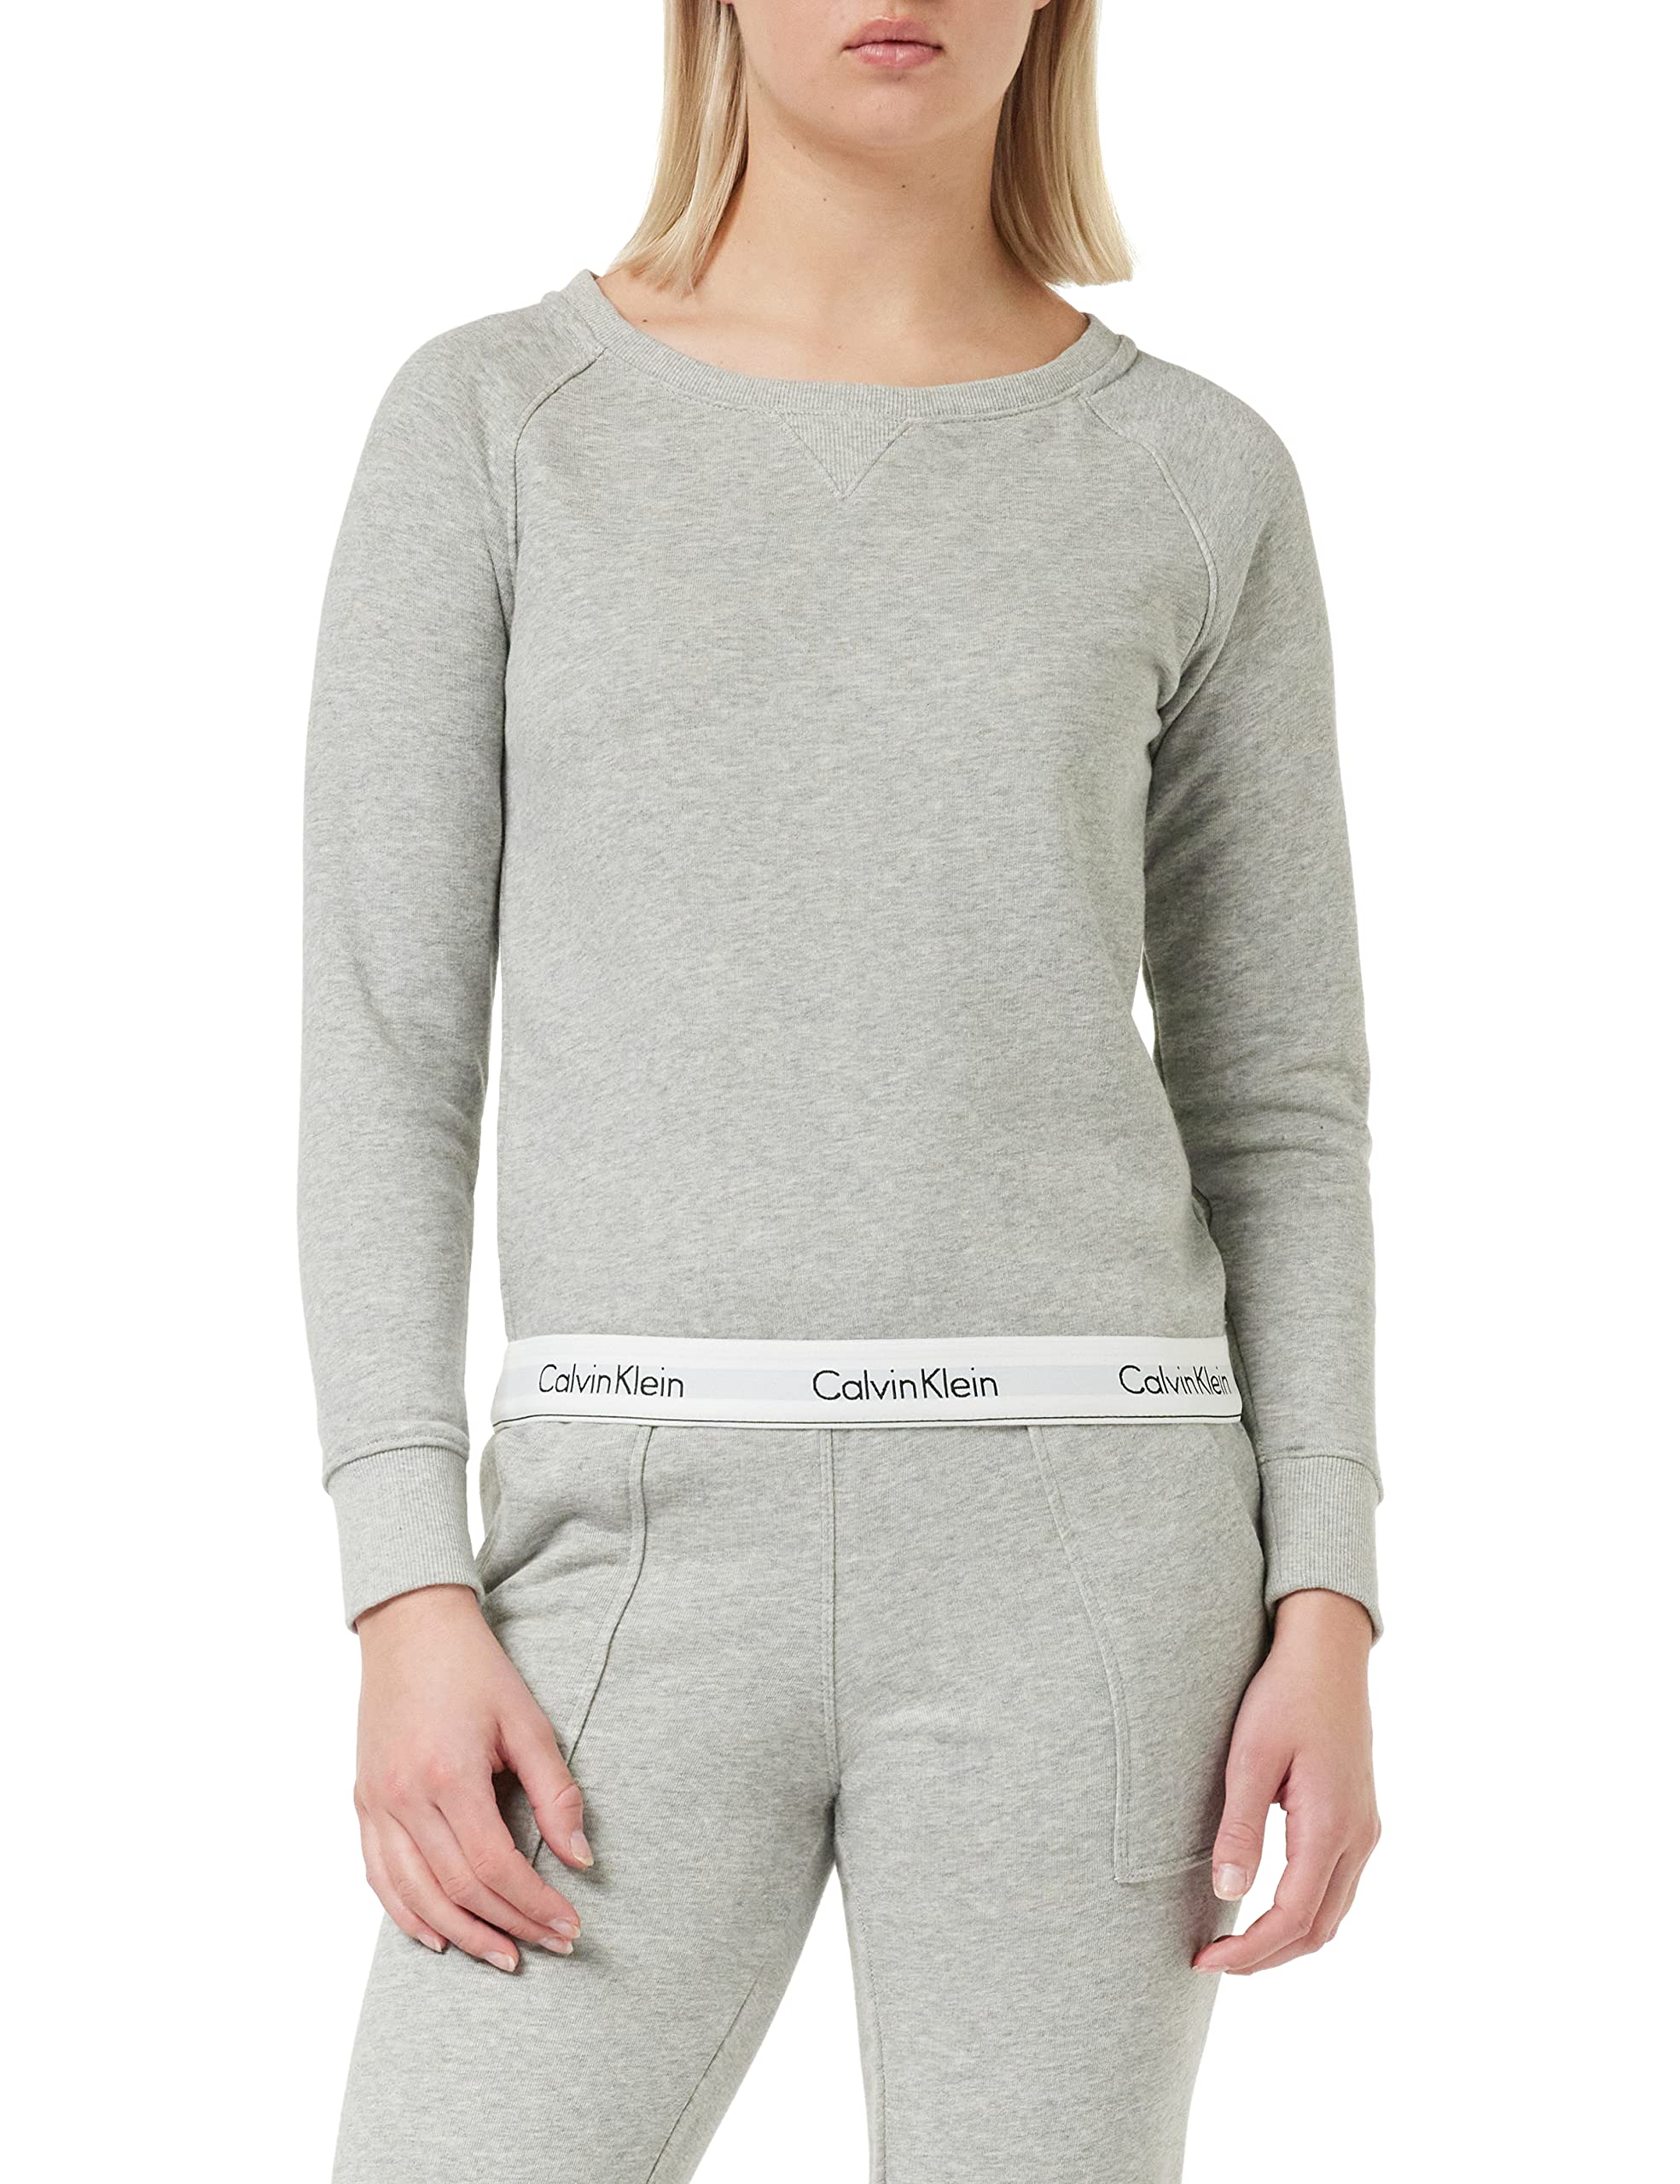 Calvin Klein Damen TOP Sweatshirt Long Sleeve Langarmshirt, Grau (Grey Heather 020), XS